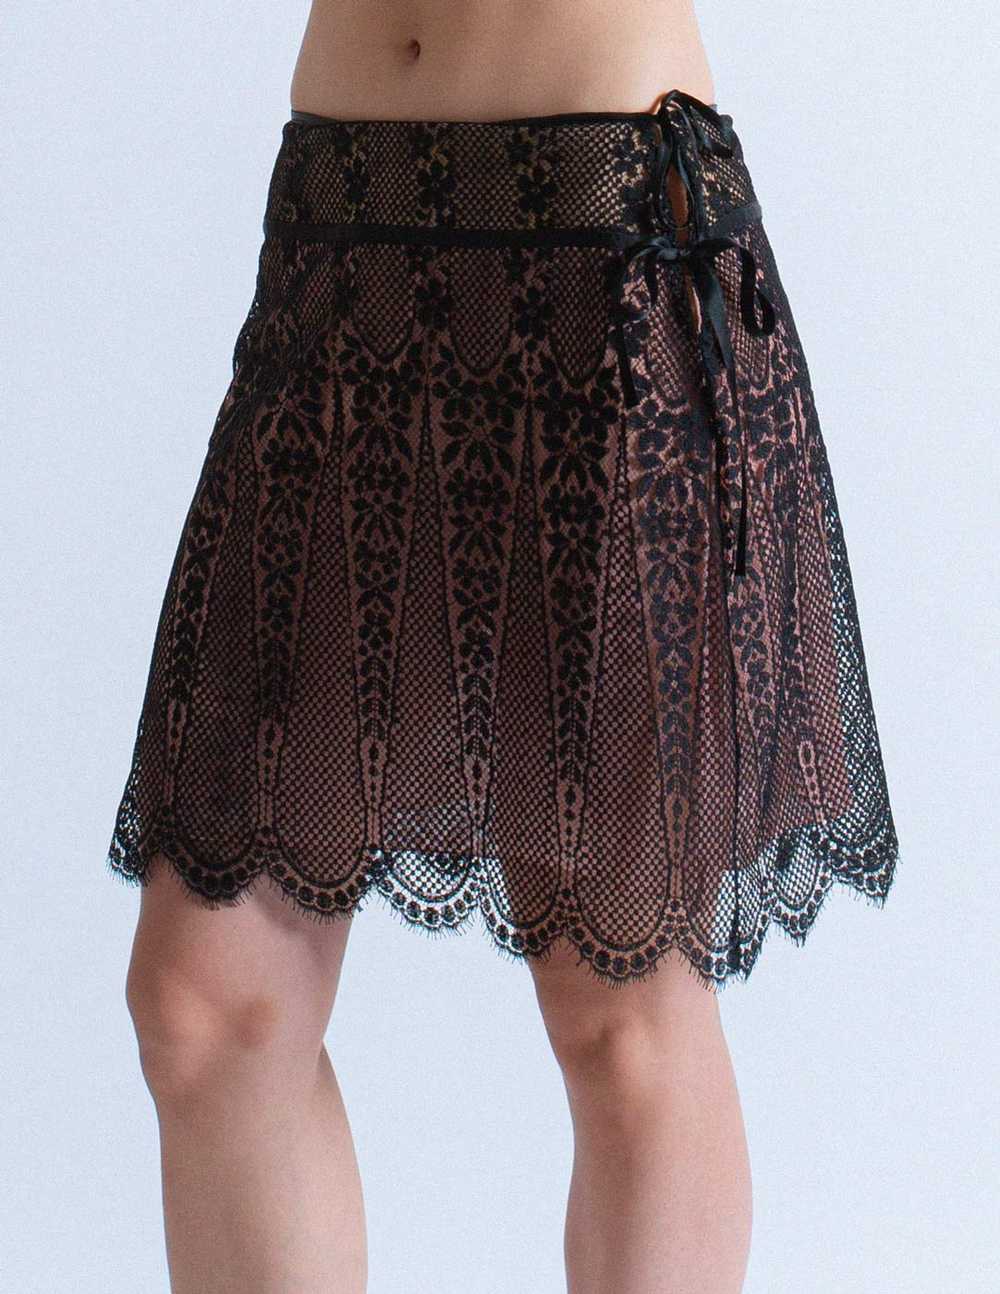 Blumarine lace skirt with ties - image 7